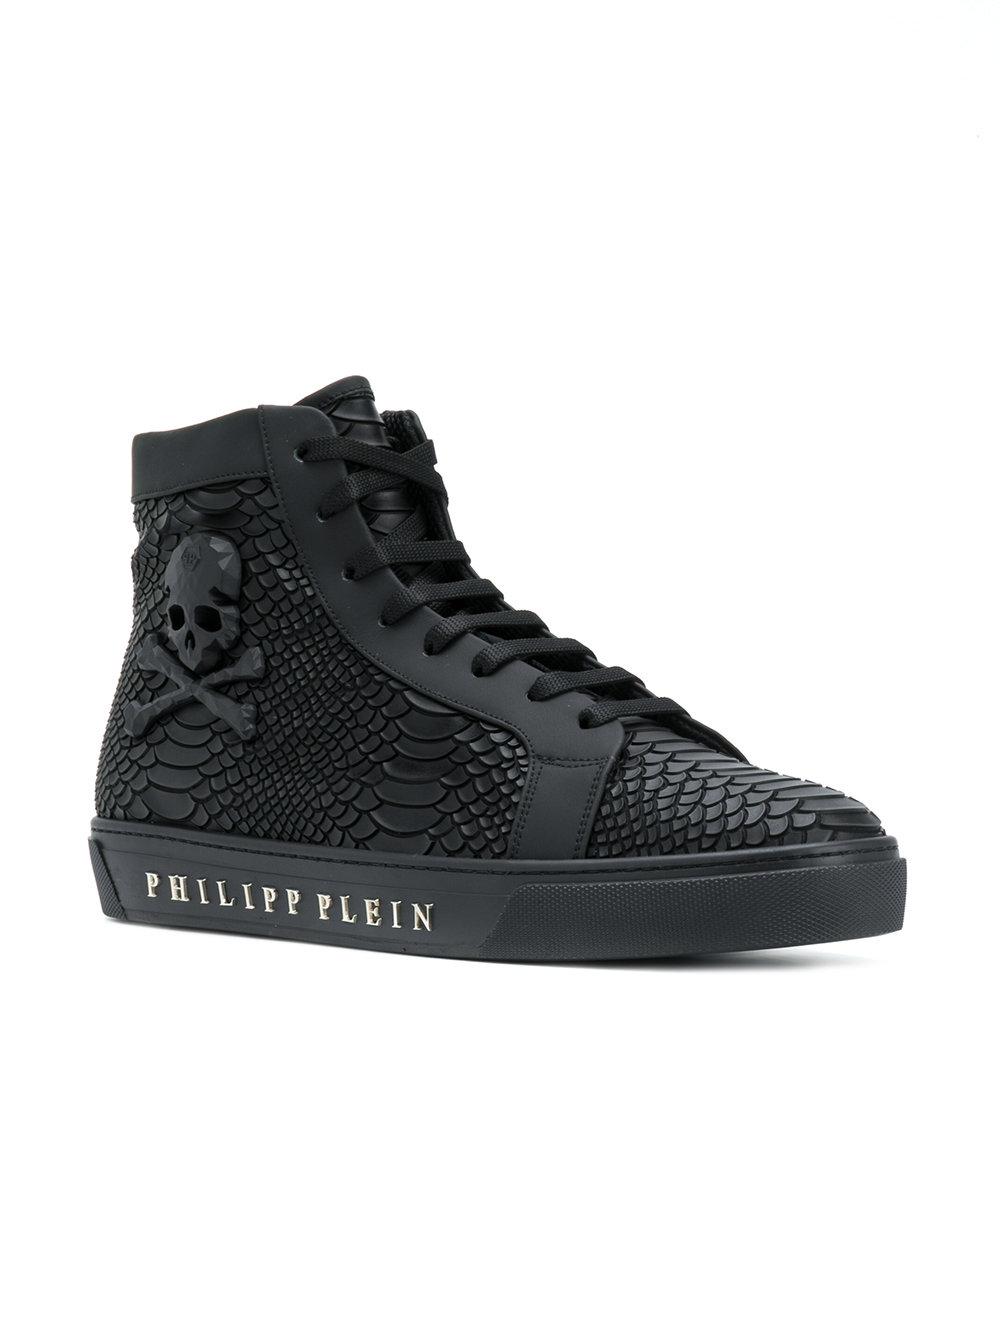 Philipp Plein Snake Effect High Top Sneakers in Black for Men | Lyst